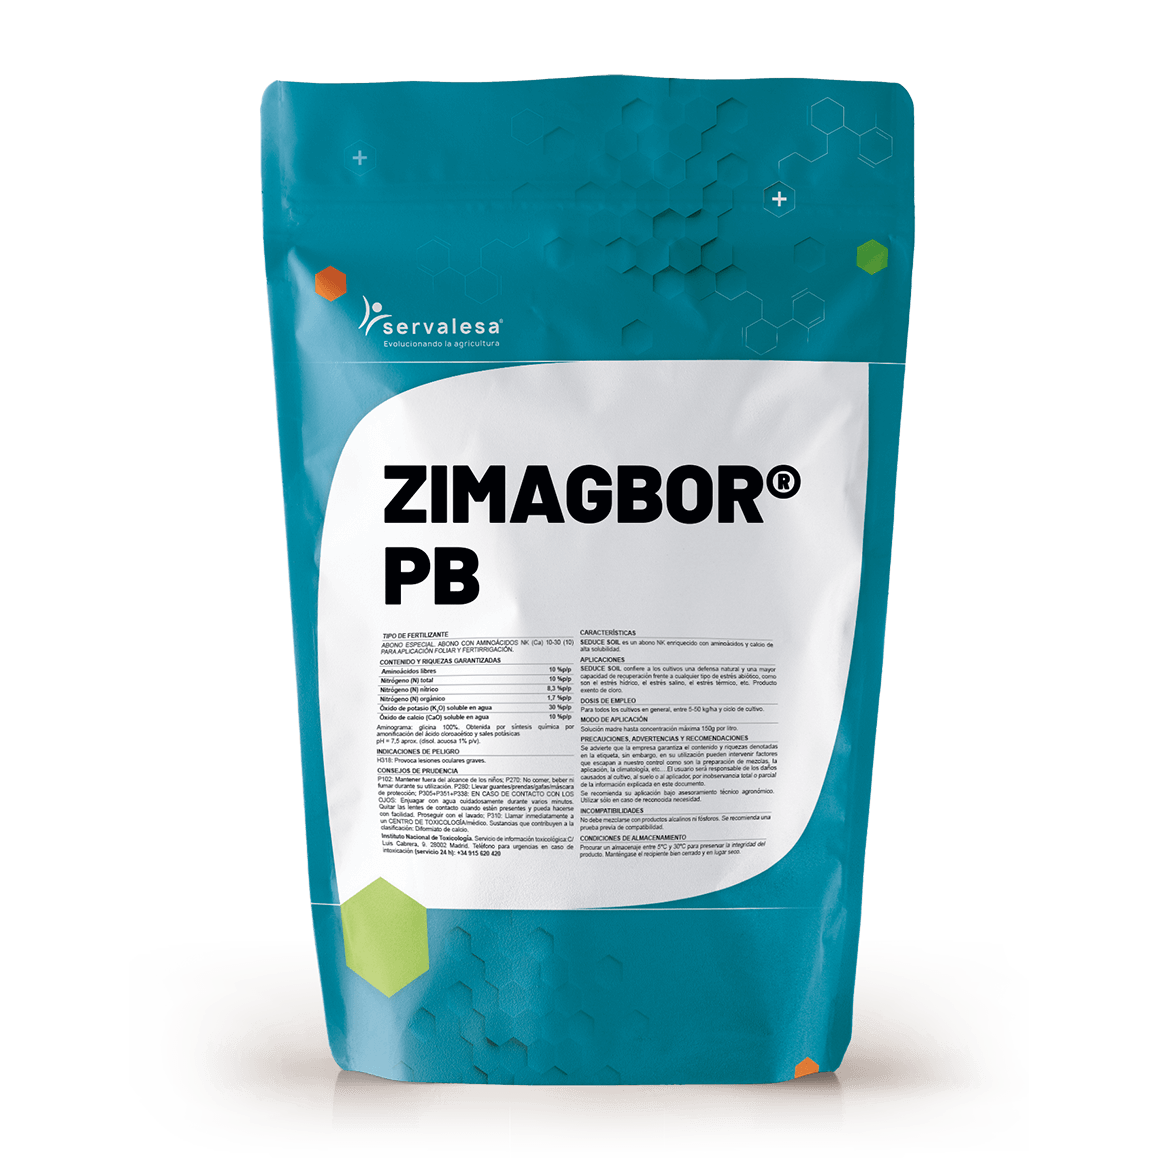 ZIMAGBOR-PB-1kg